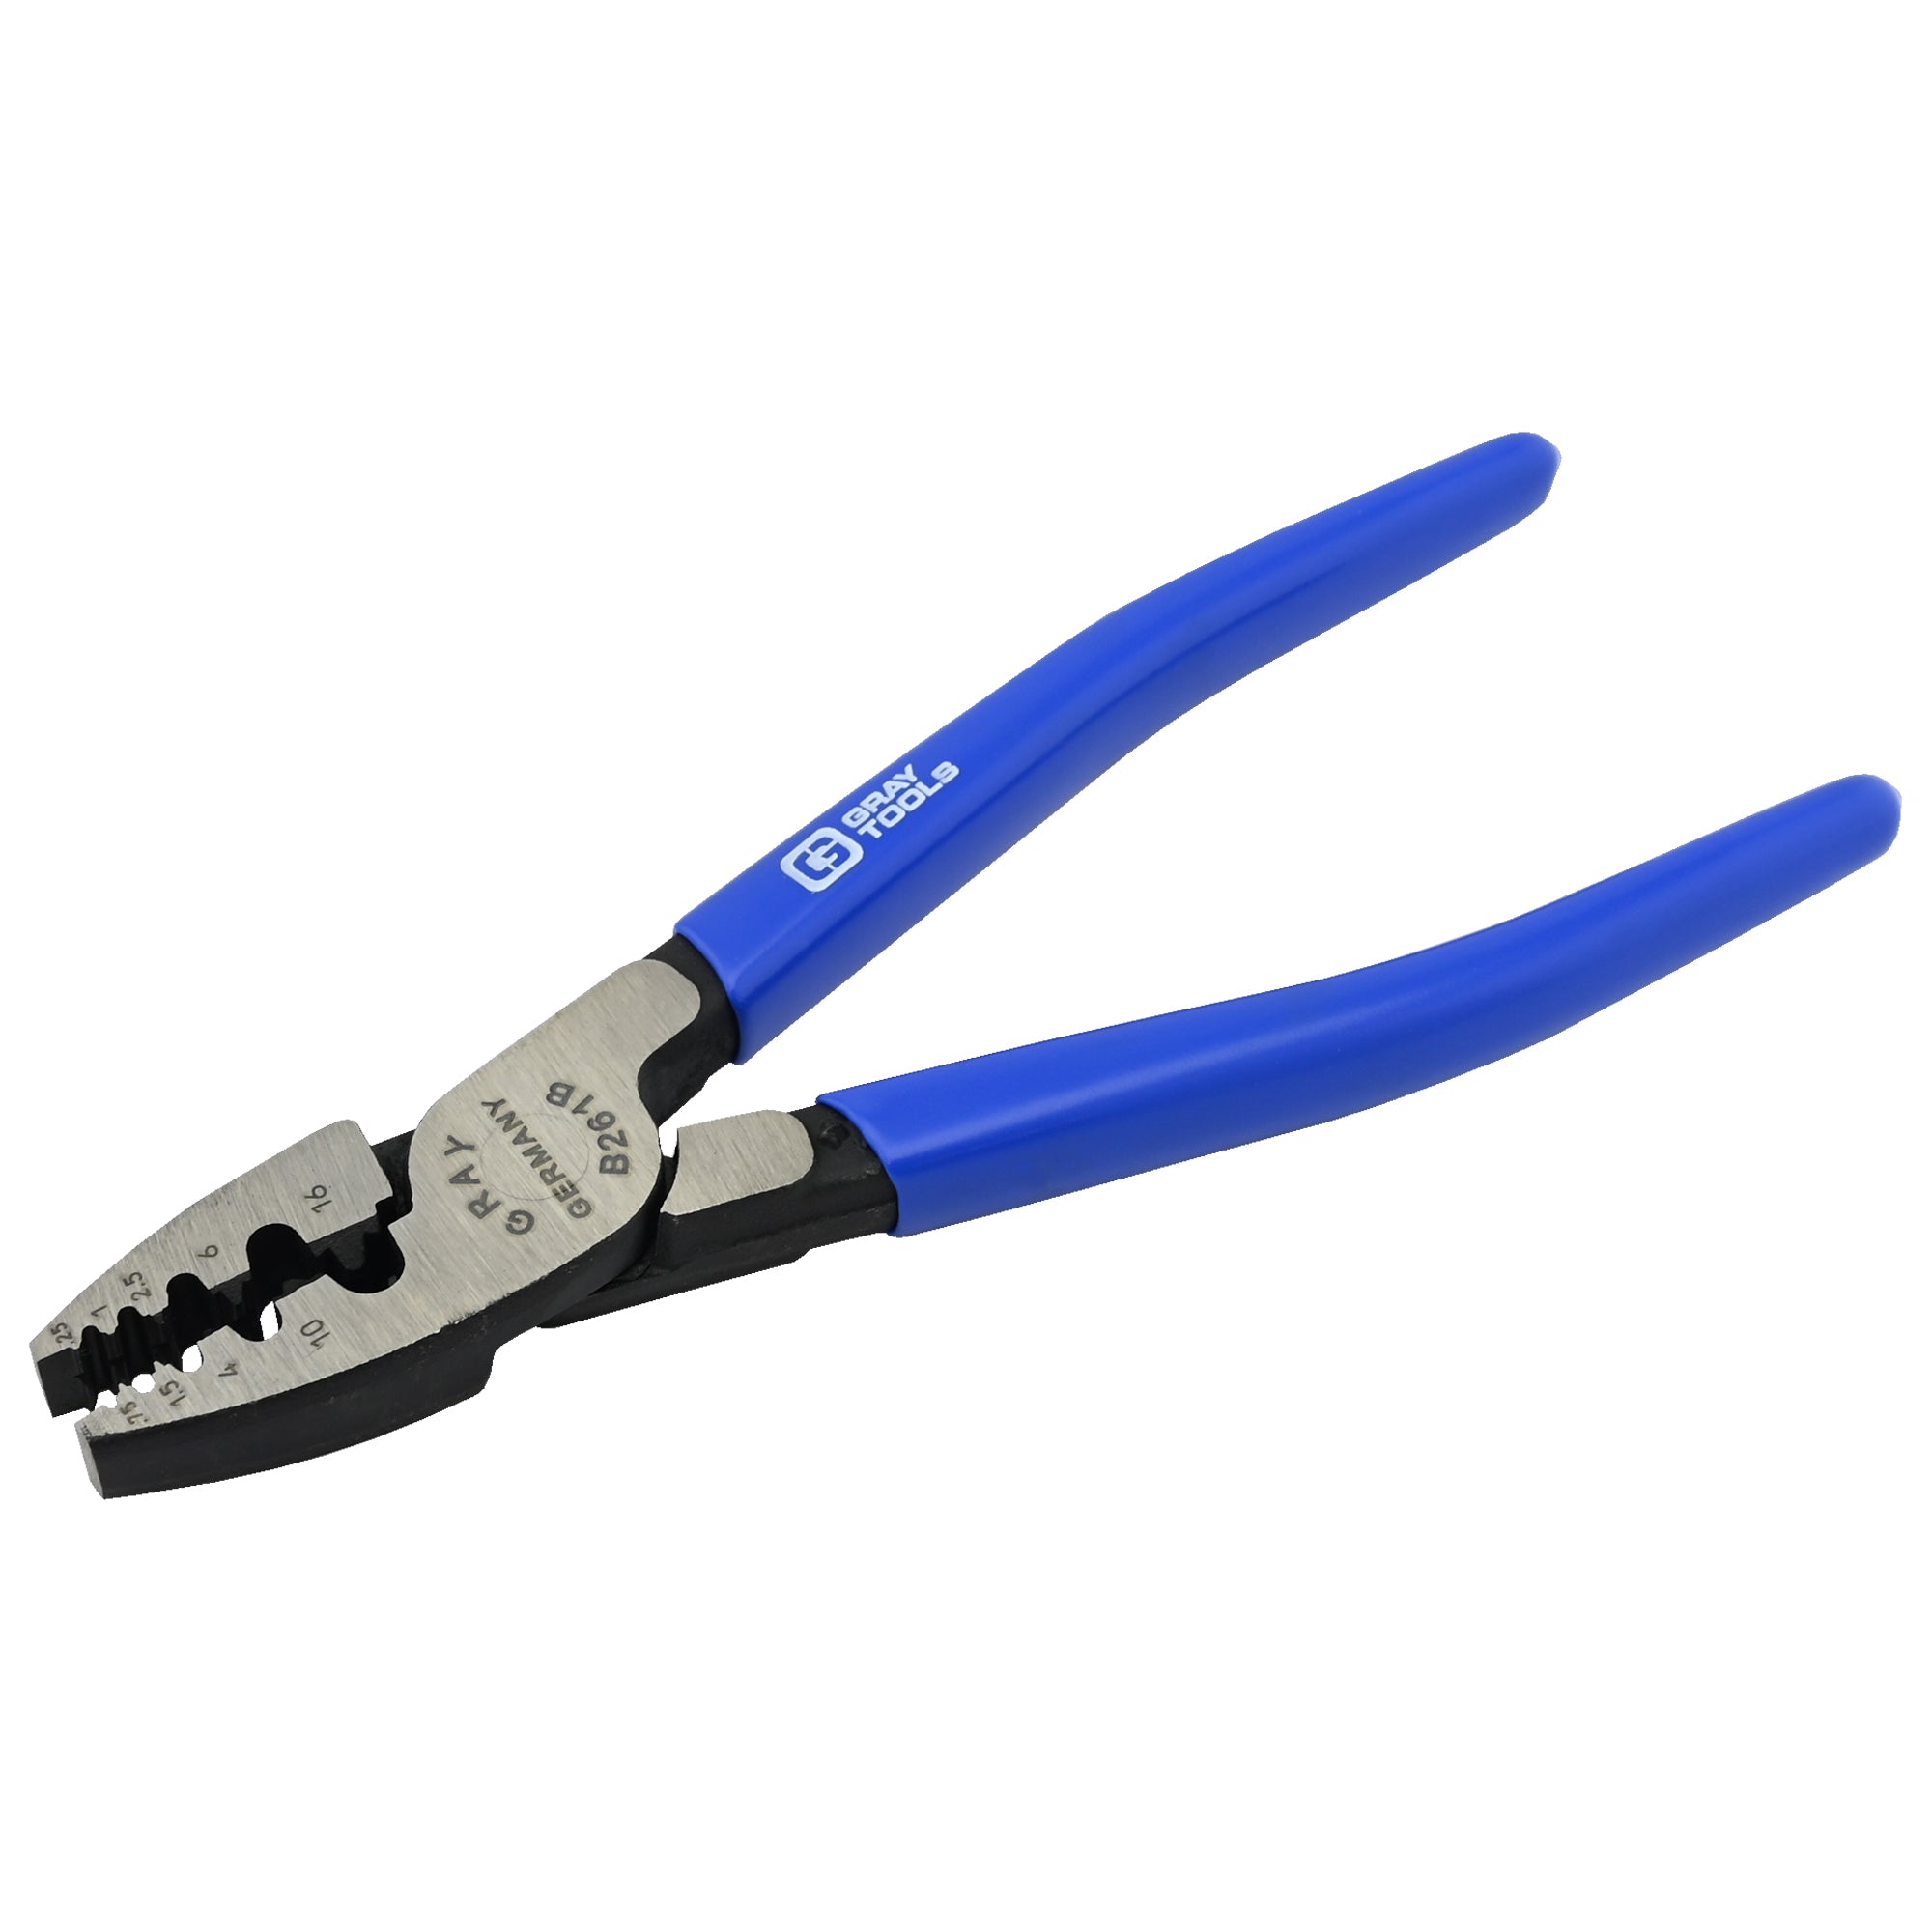 Crimping Pliers for Ferrule Crimp Pin Terminals – Gray Tools